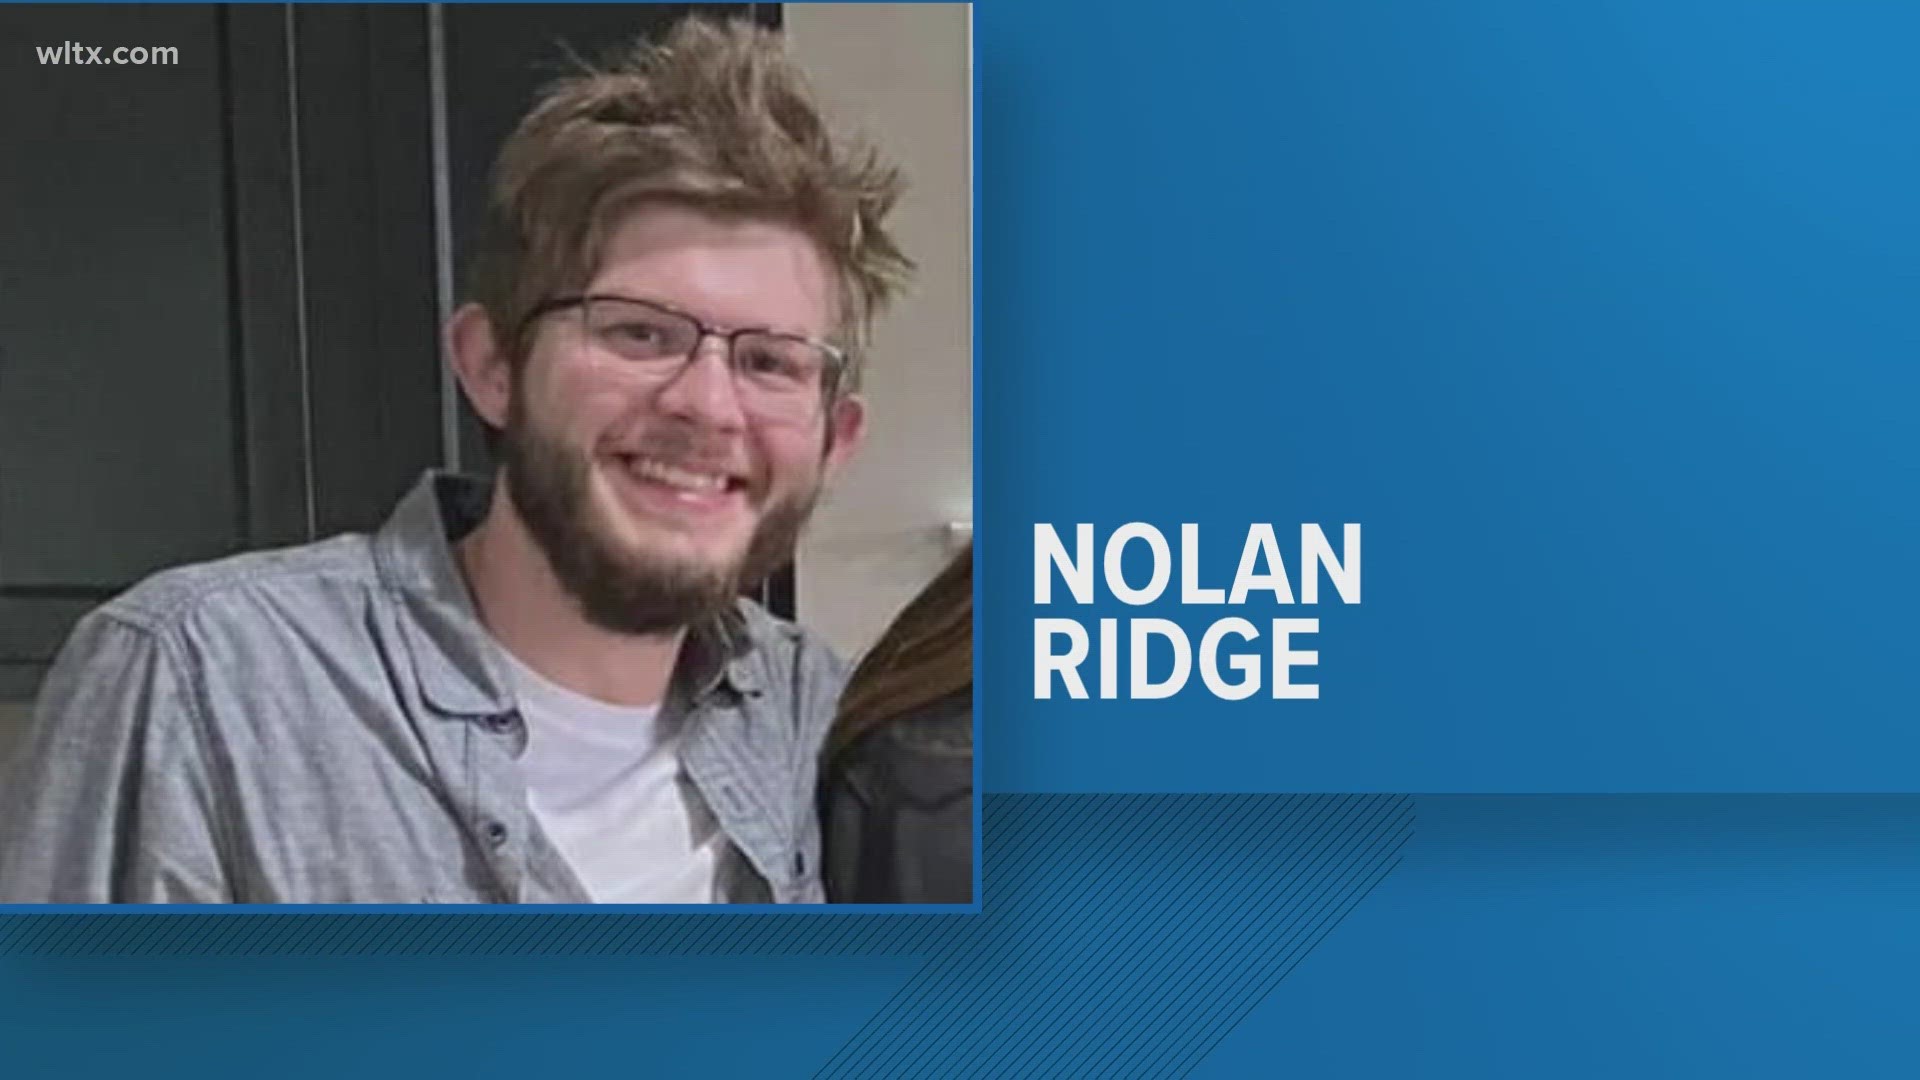 Nolan Ridge, 25, was found dead following what authorities believe was a car crash.